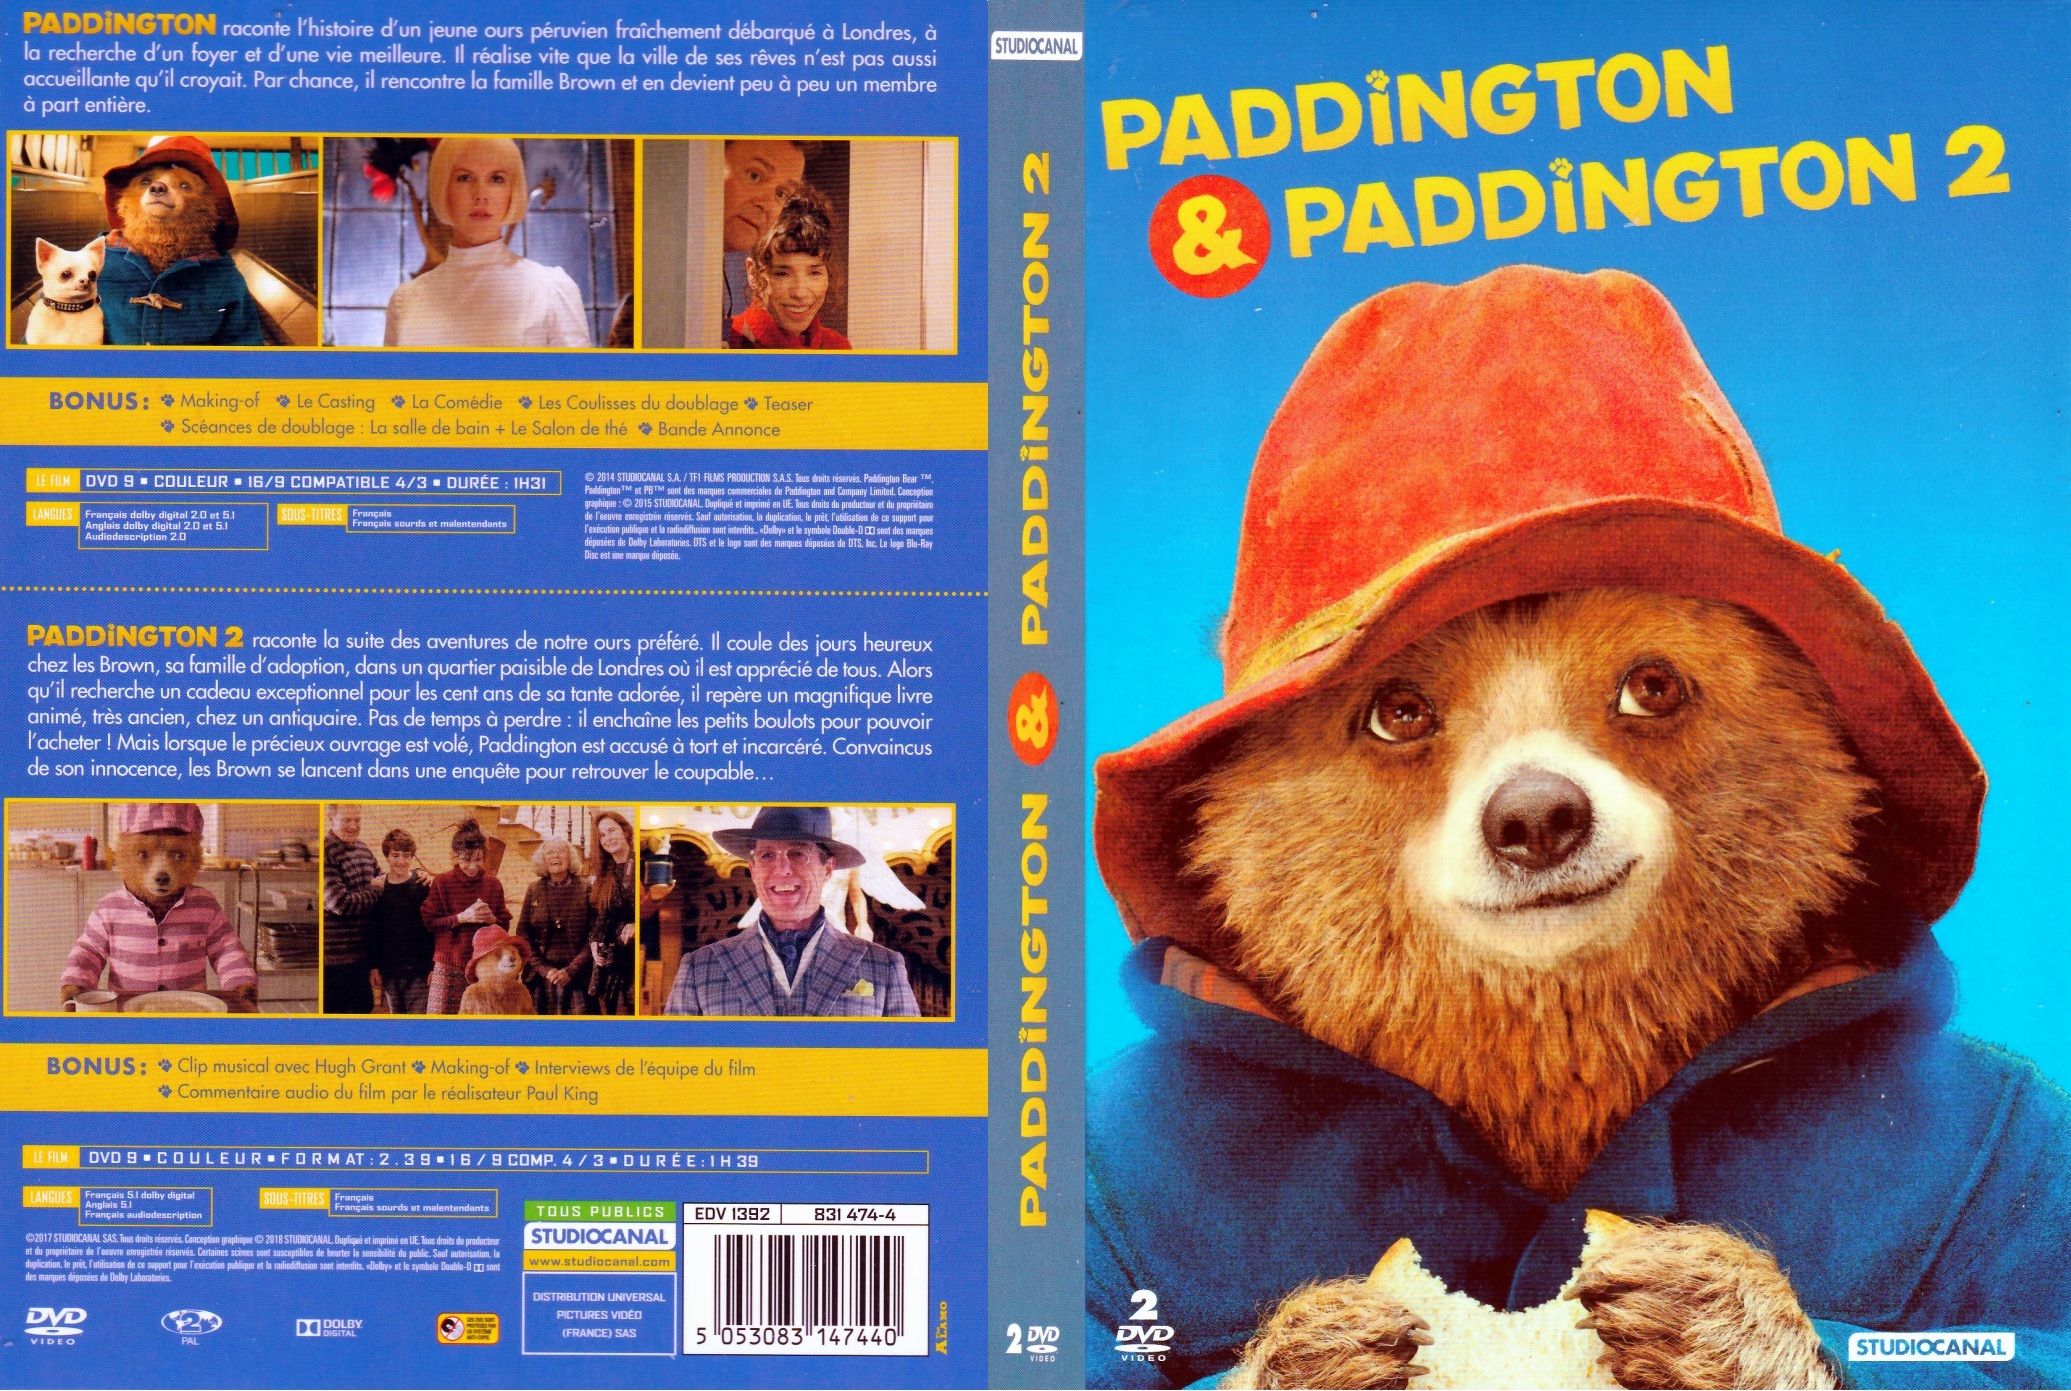 Jaquette DVD Paddington - Paddington 2 custom